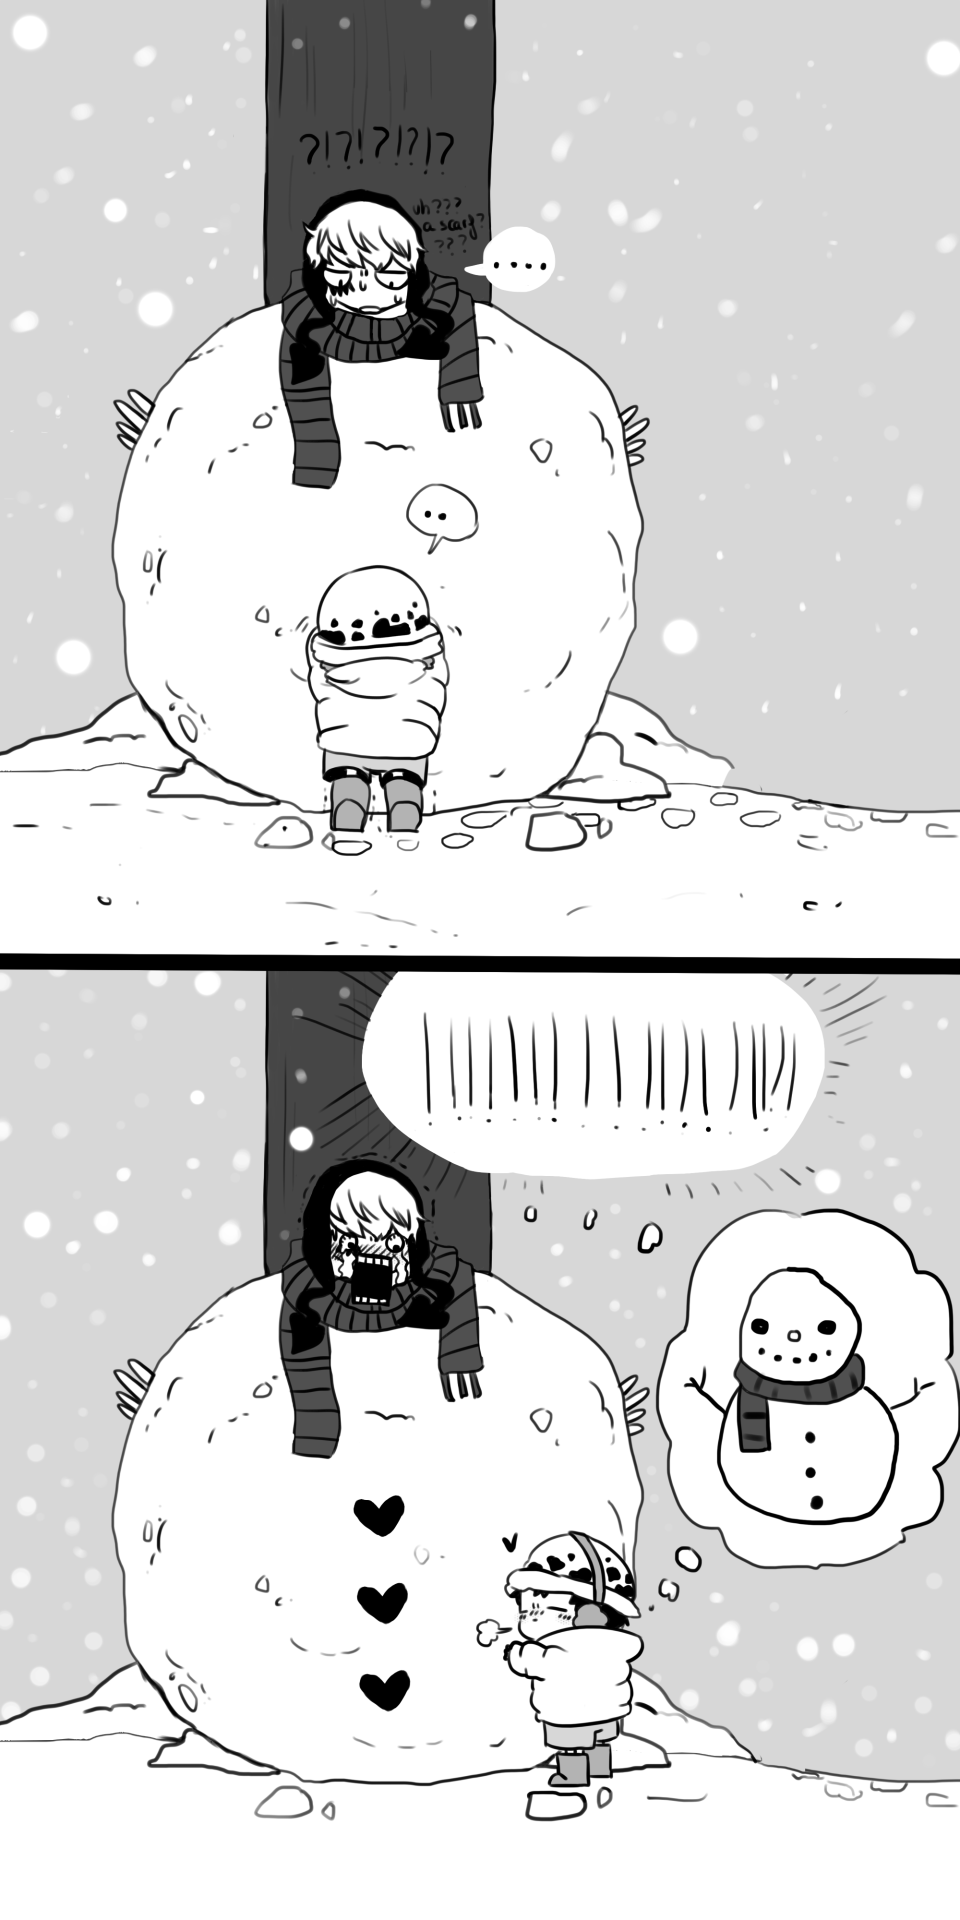 go-go-go-karu:Best snowman ever   💕💕⛄❄  